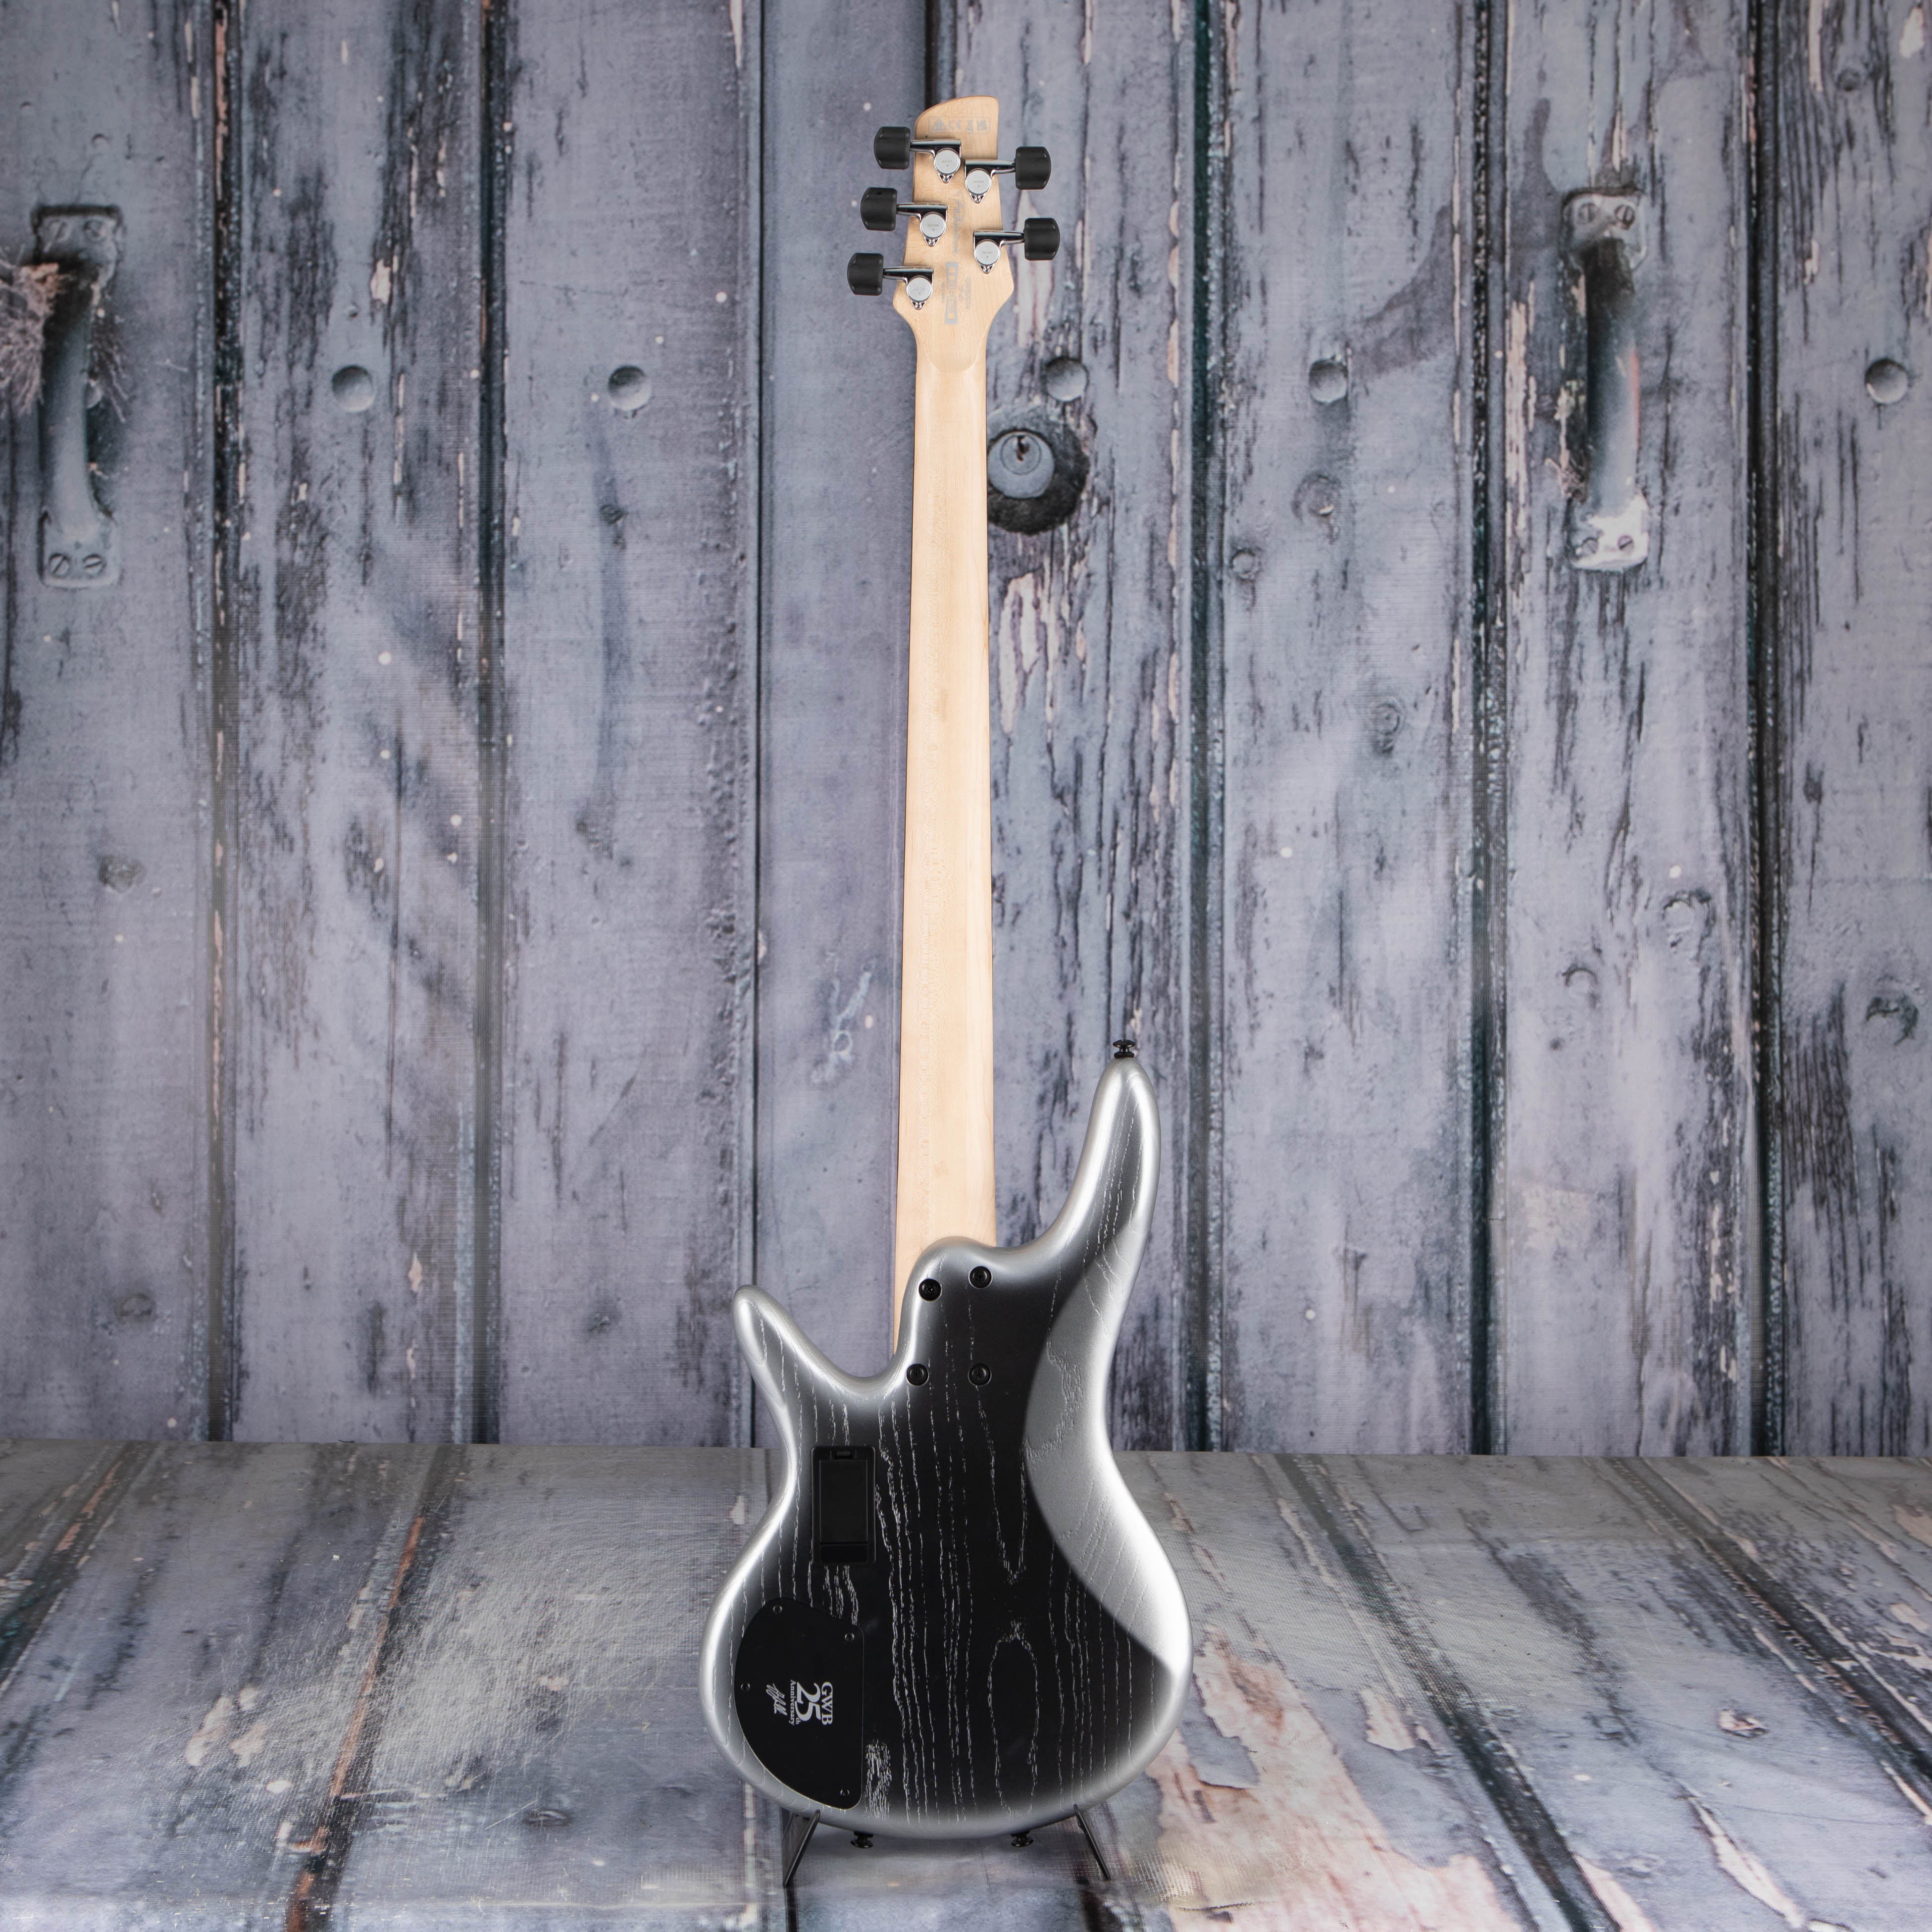 Ibanez Premium Gary Willis Signature Fretless 5-String Electric Bass Guitar, Silver Wave Burst Flat, back